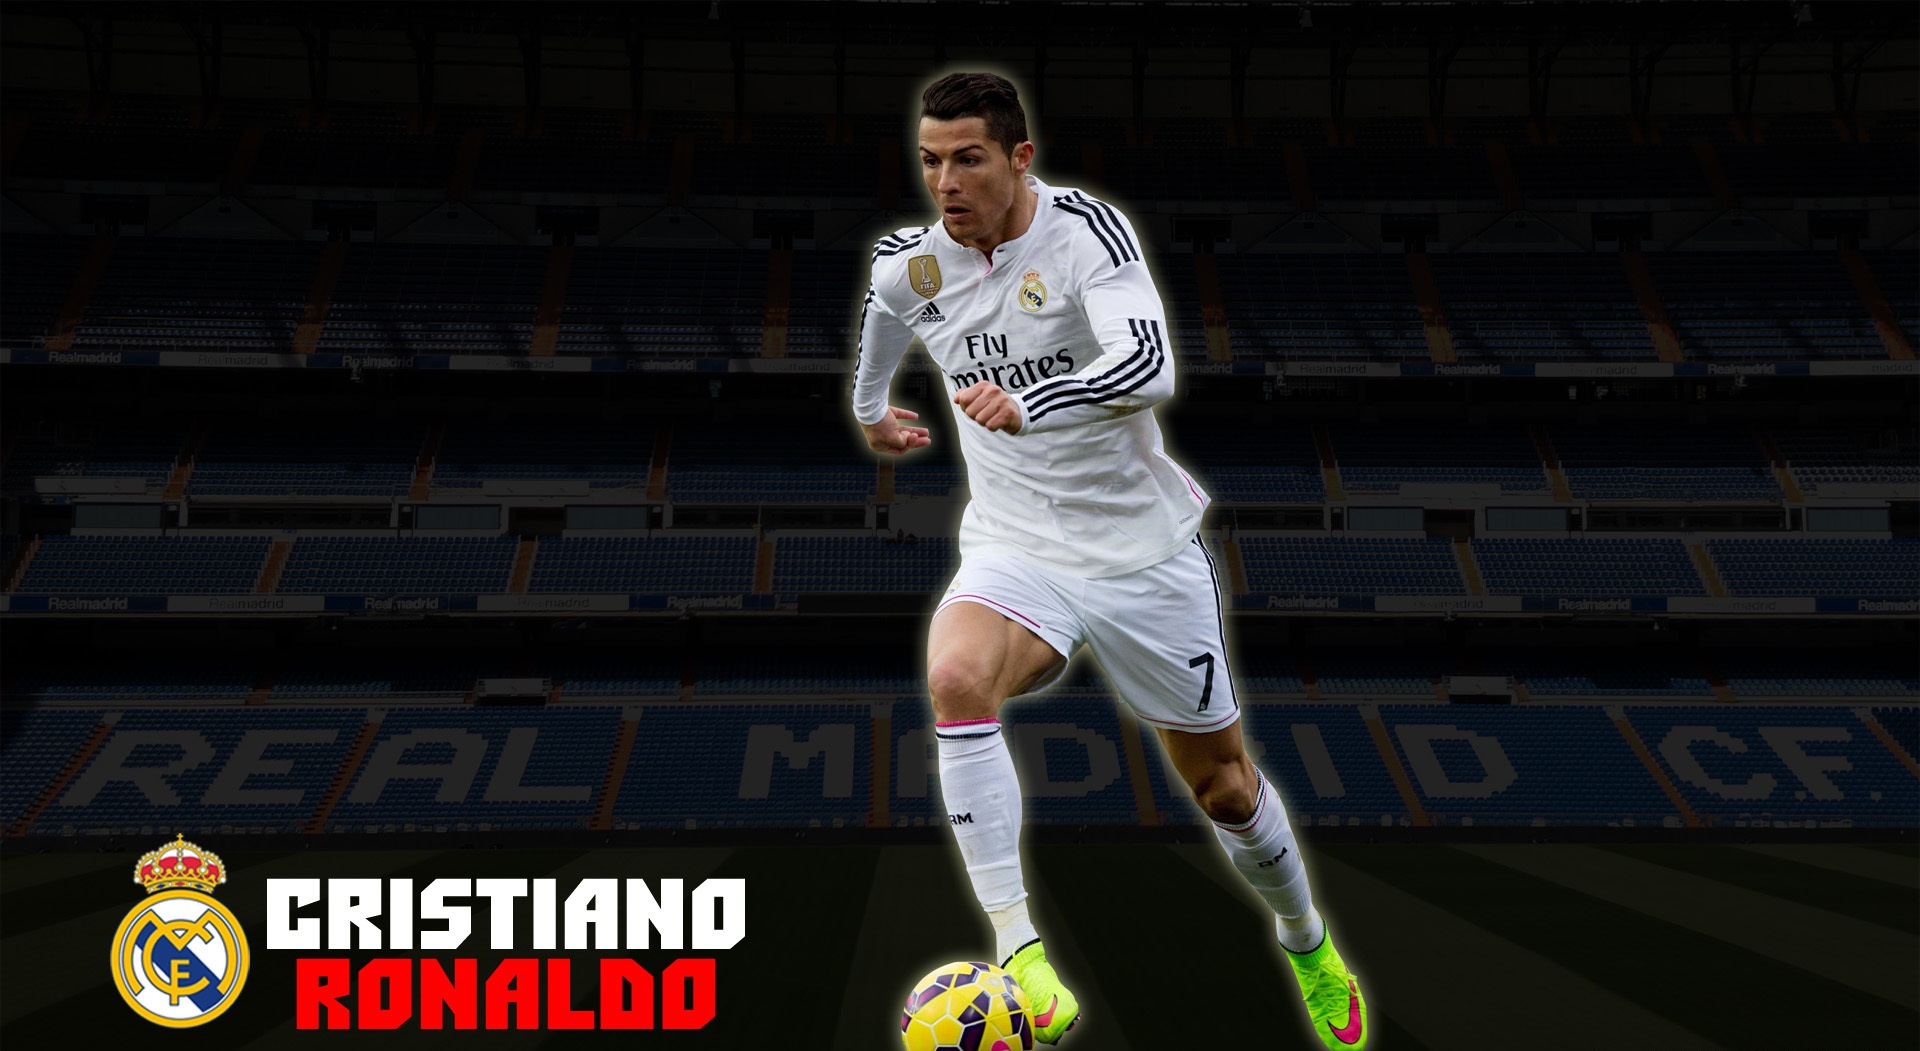 Cristiano Ronaldo Wallpaper HD Background Of Your